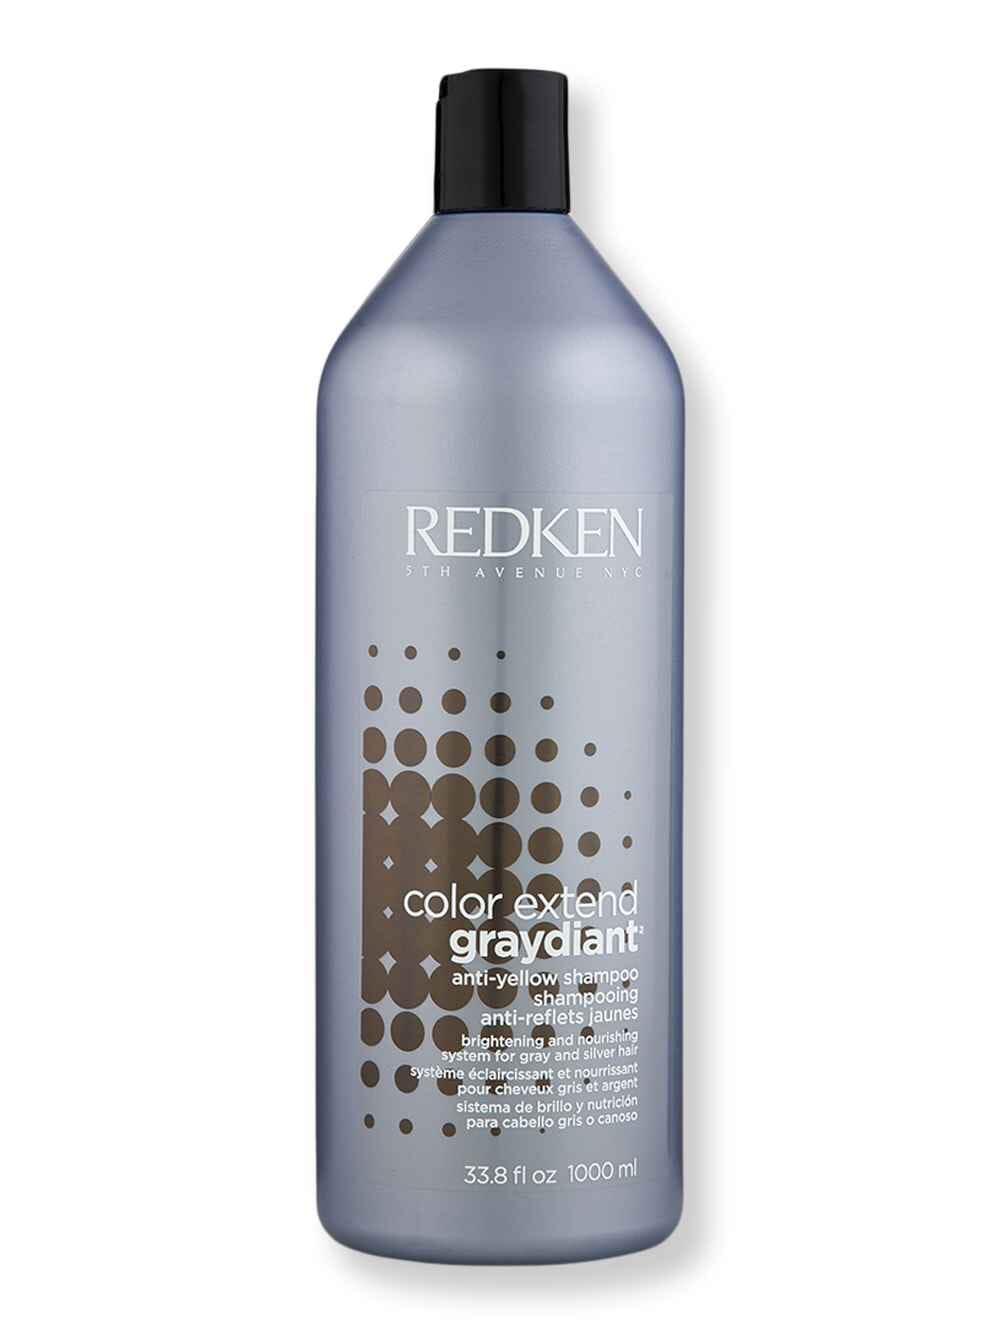 Redken Redken Color Extend Graydiant Shampoo Liter Shampoos 